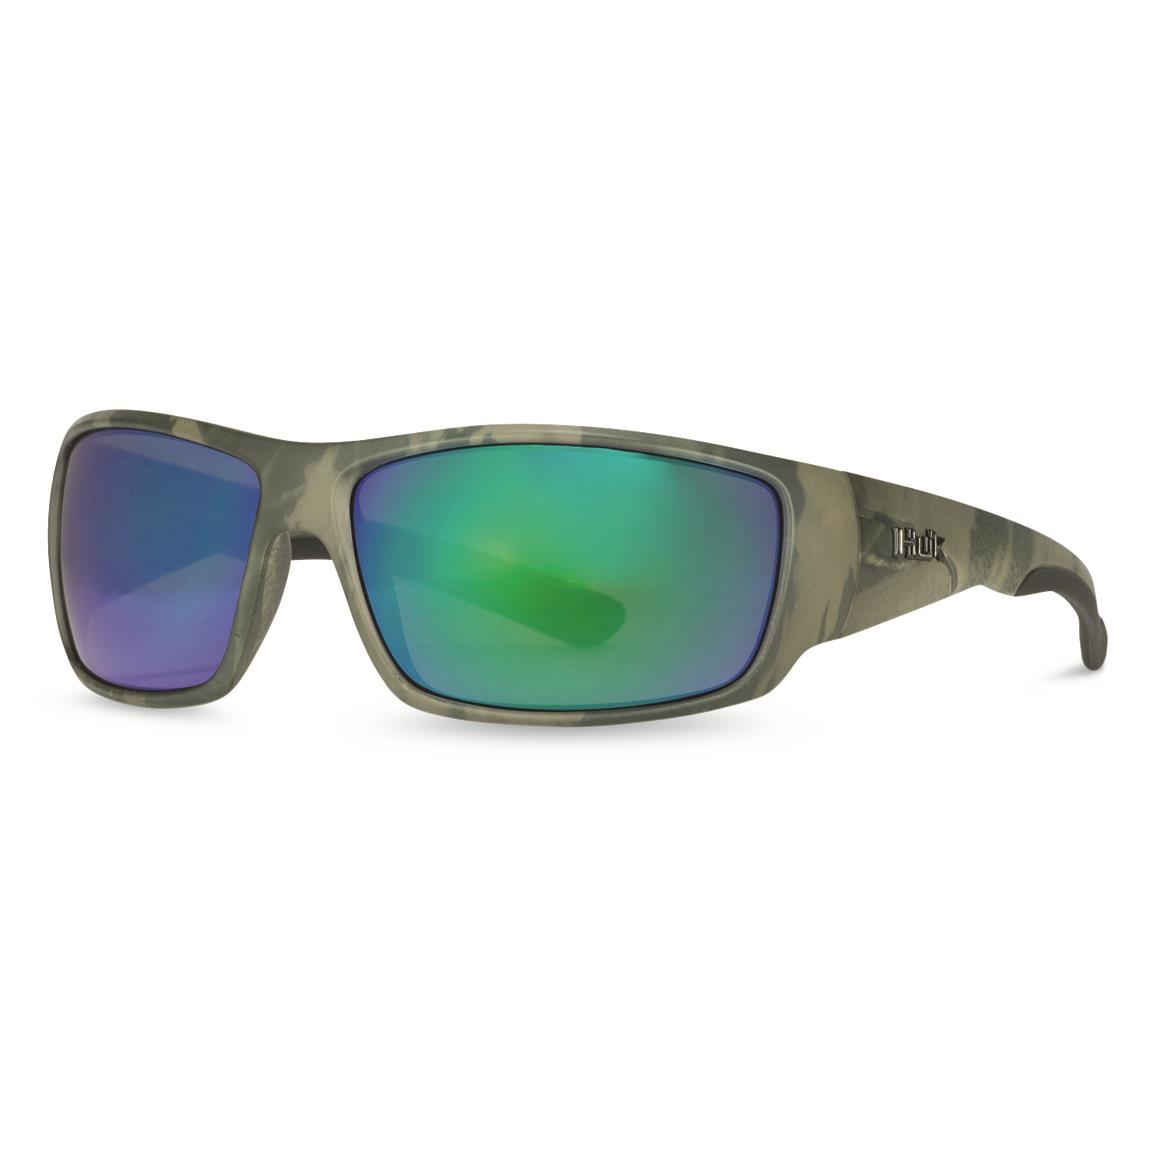 Huk Men's Spearpoint Polarized Sunglasses, Southern Tier Subphantis/smoke/green Mir